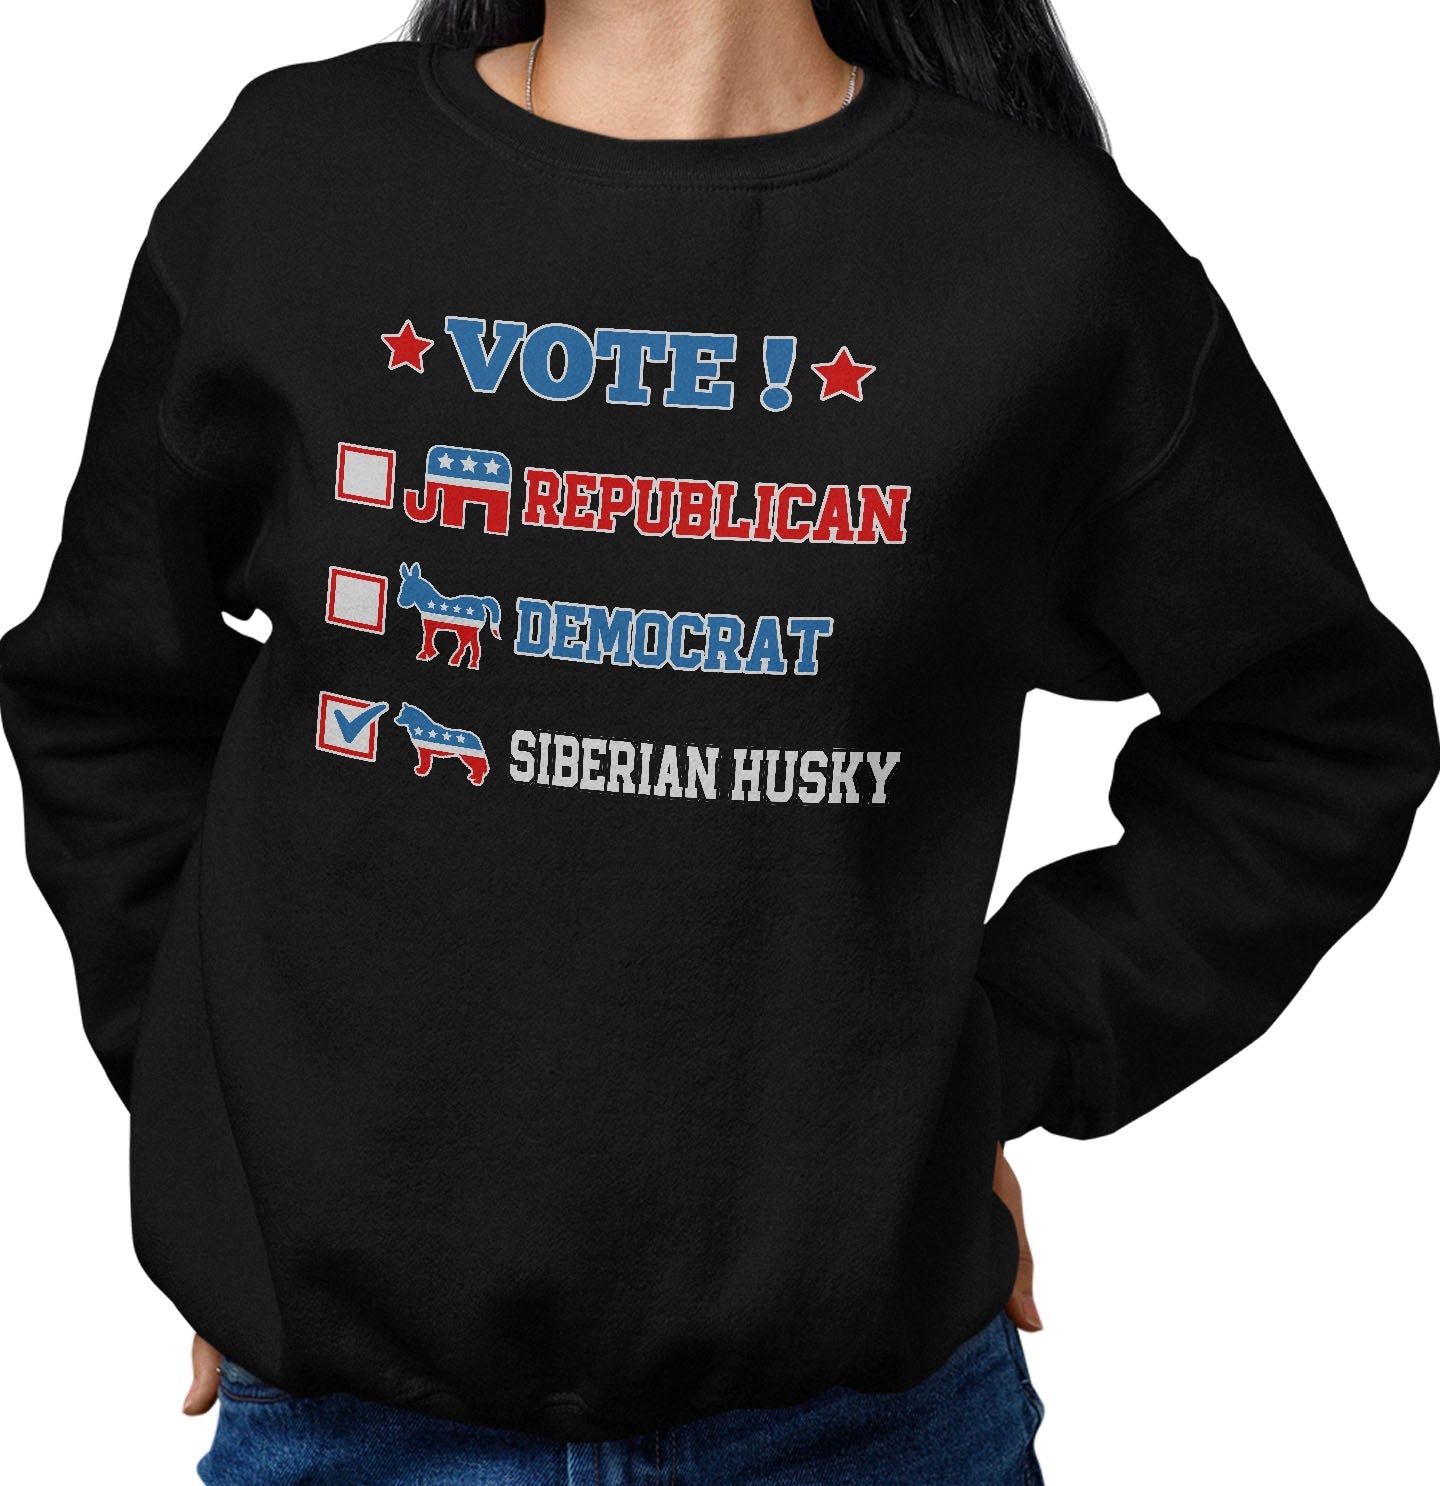 Vote for the Siberian Husky - Adult Unisex Crewneck Sweatshirt